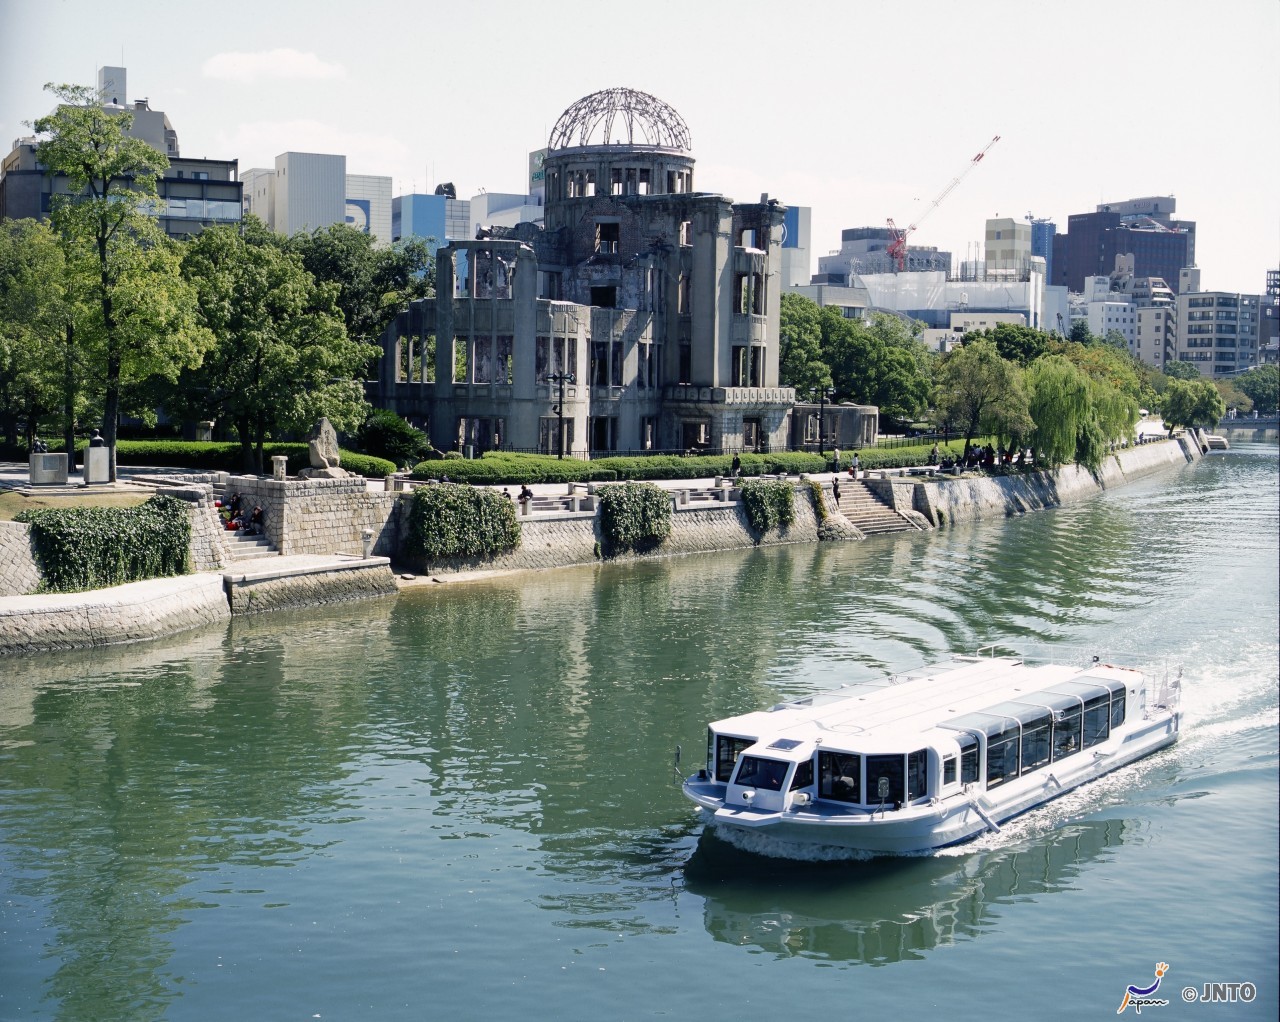 A-Bomb Dome Hiroshima Peace Memorial